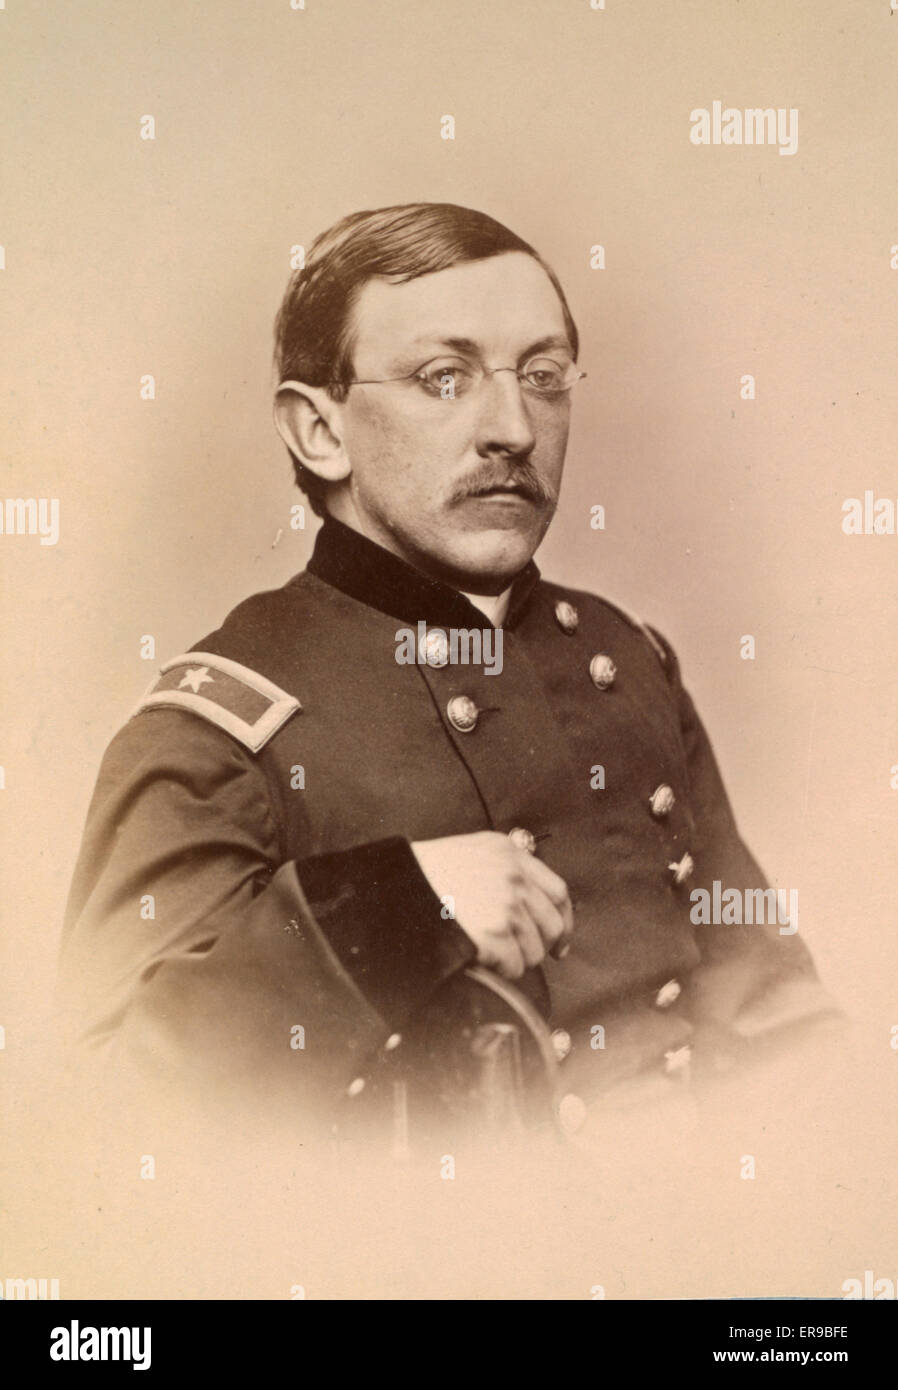 Bvt. El Mayor General George H. Chapman, retrato de media longitud 1860 Foto de stock